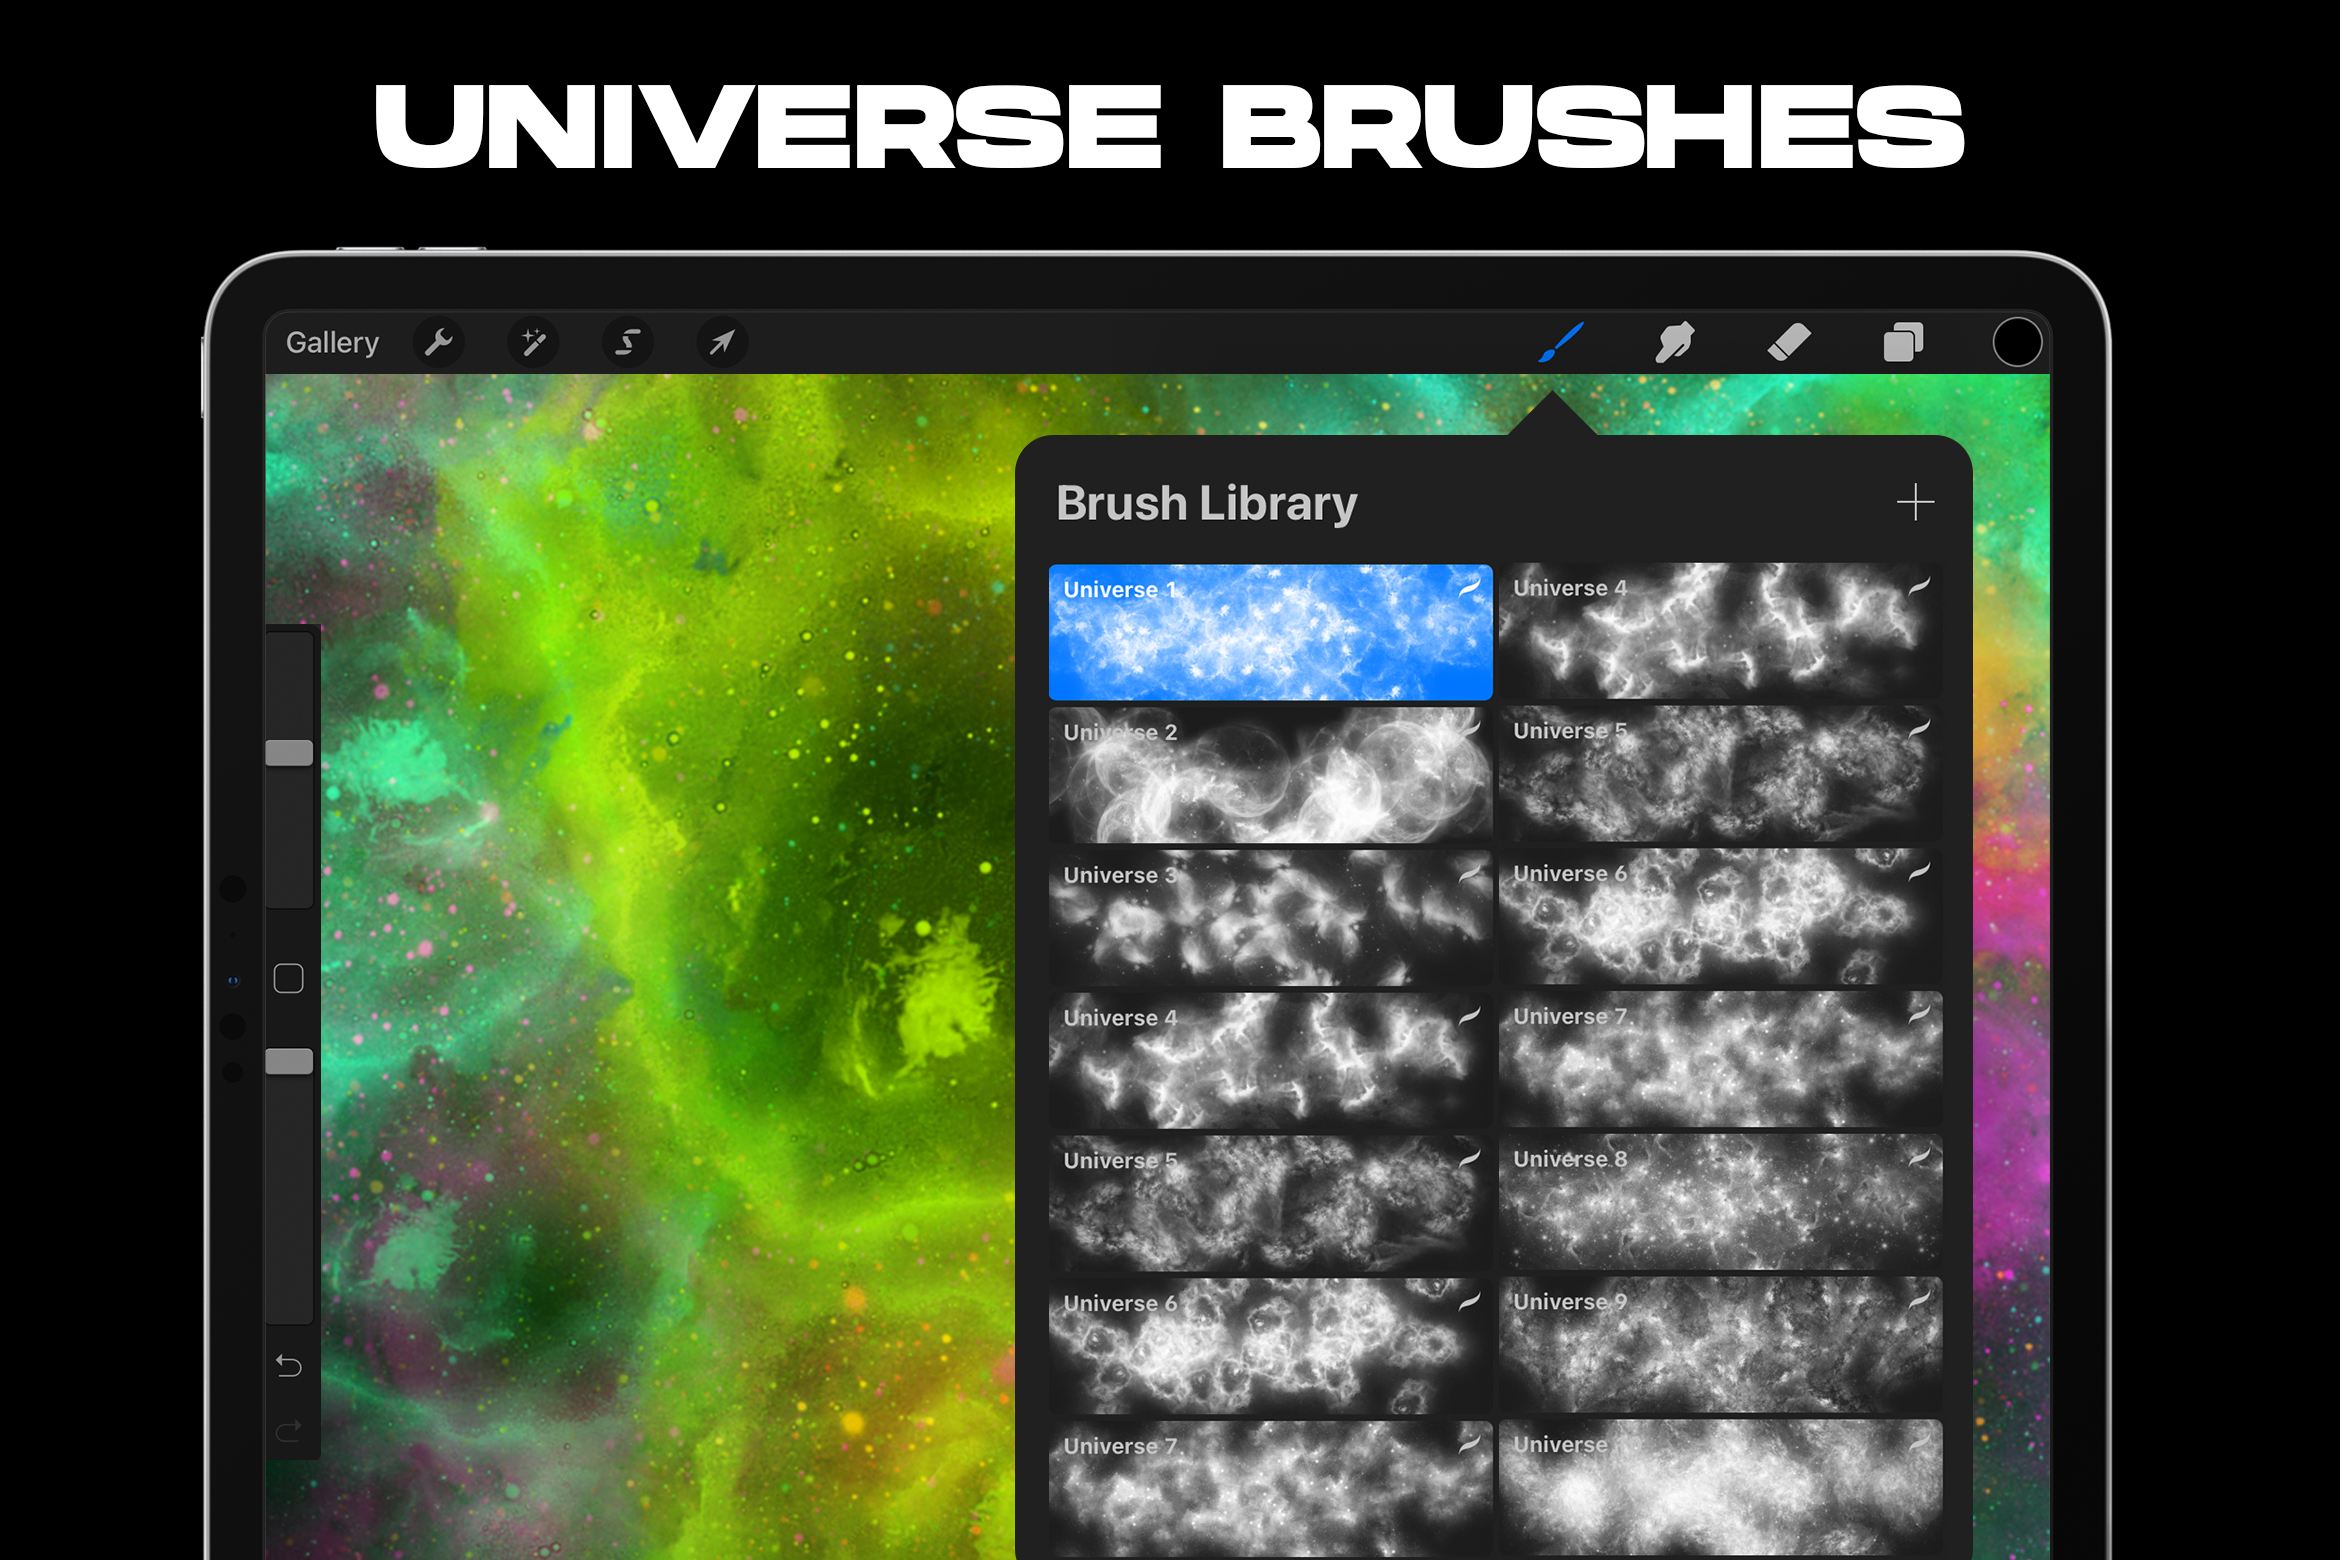 space procreate brushes free